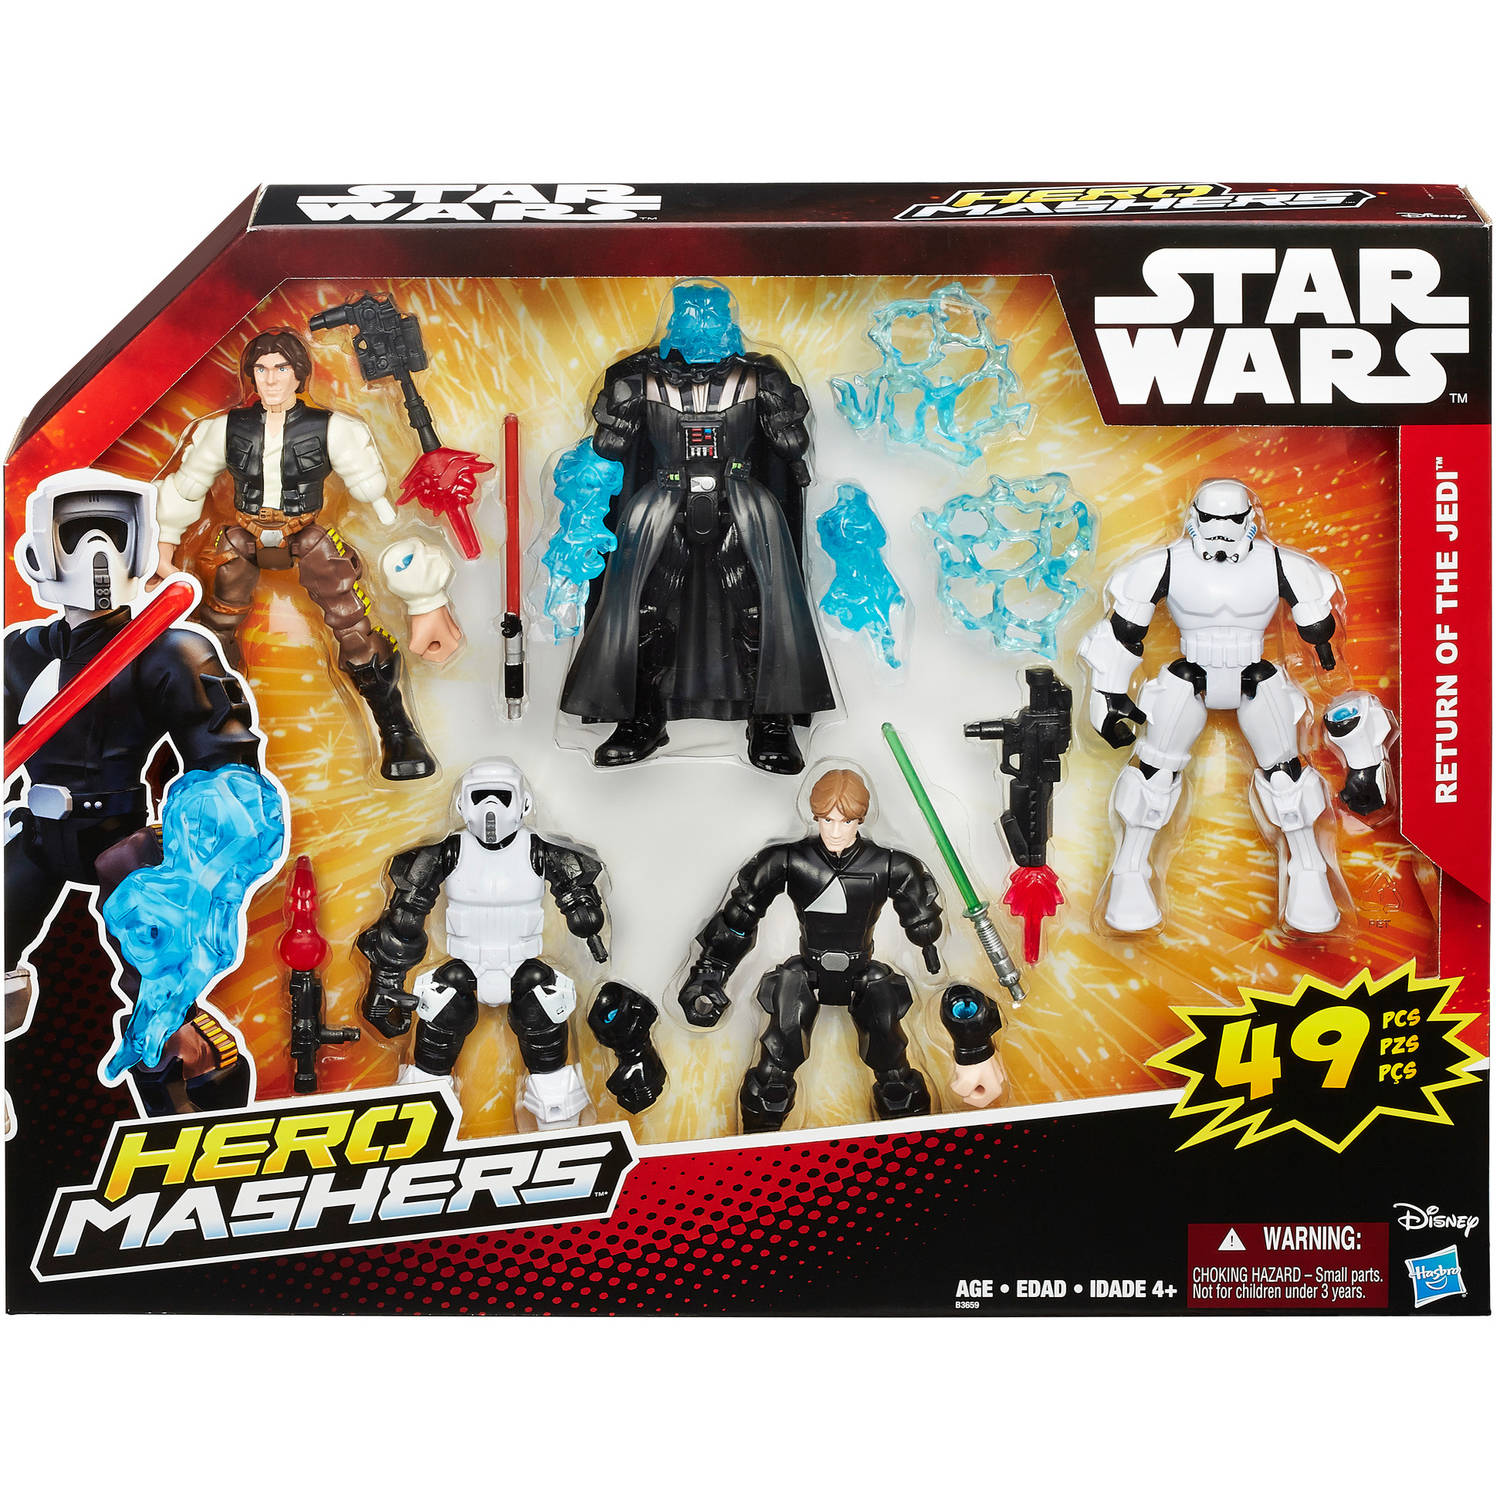 Star Wars Hero Mashers Return of the Jedi Multipack - image 2 of 11